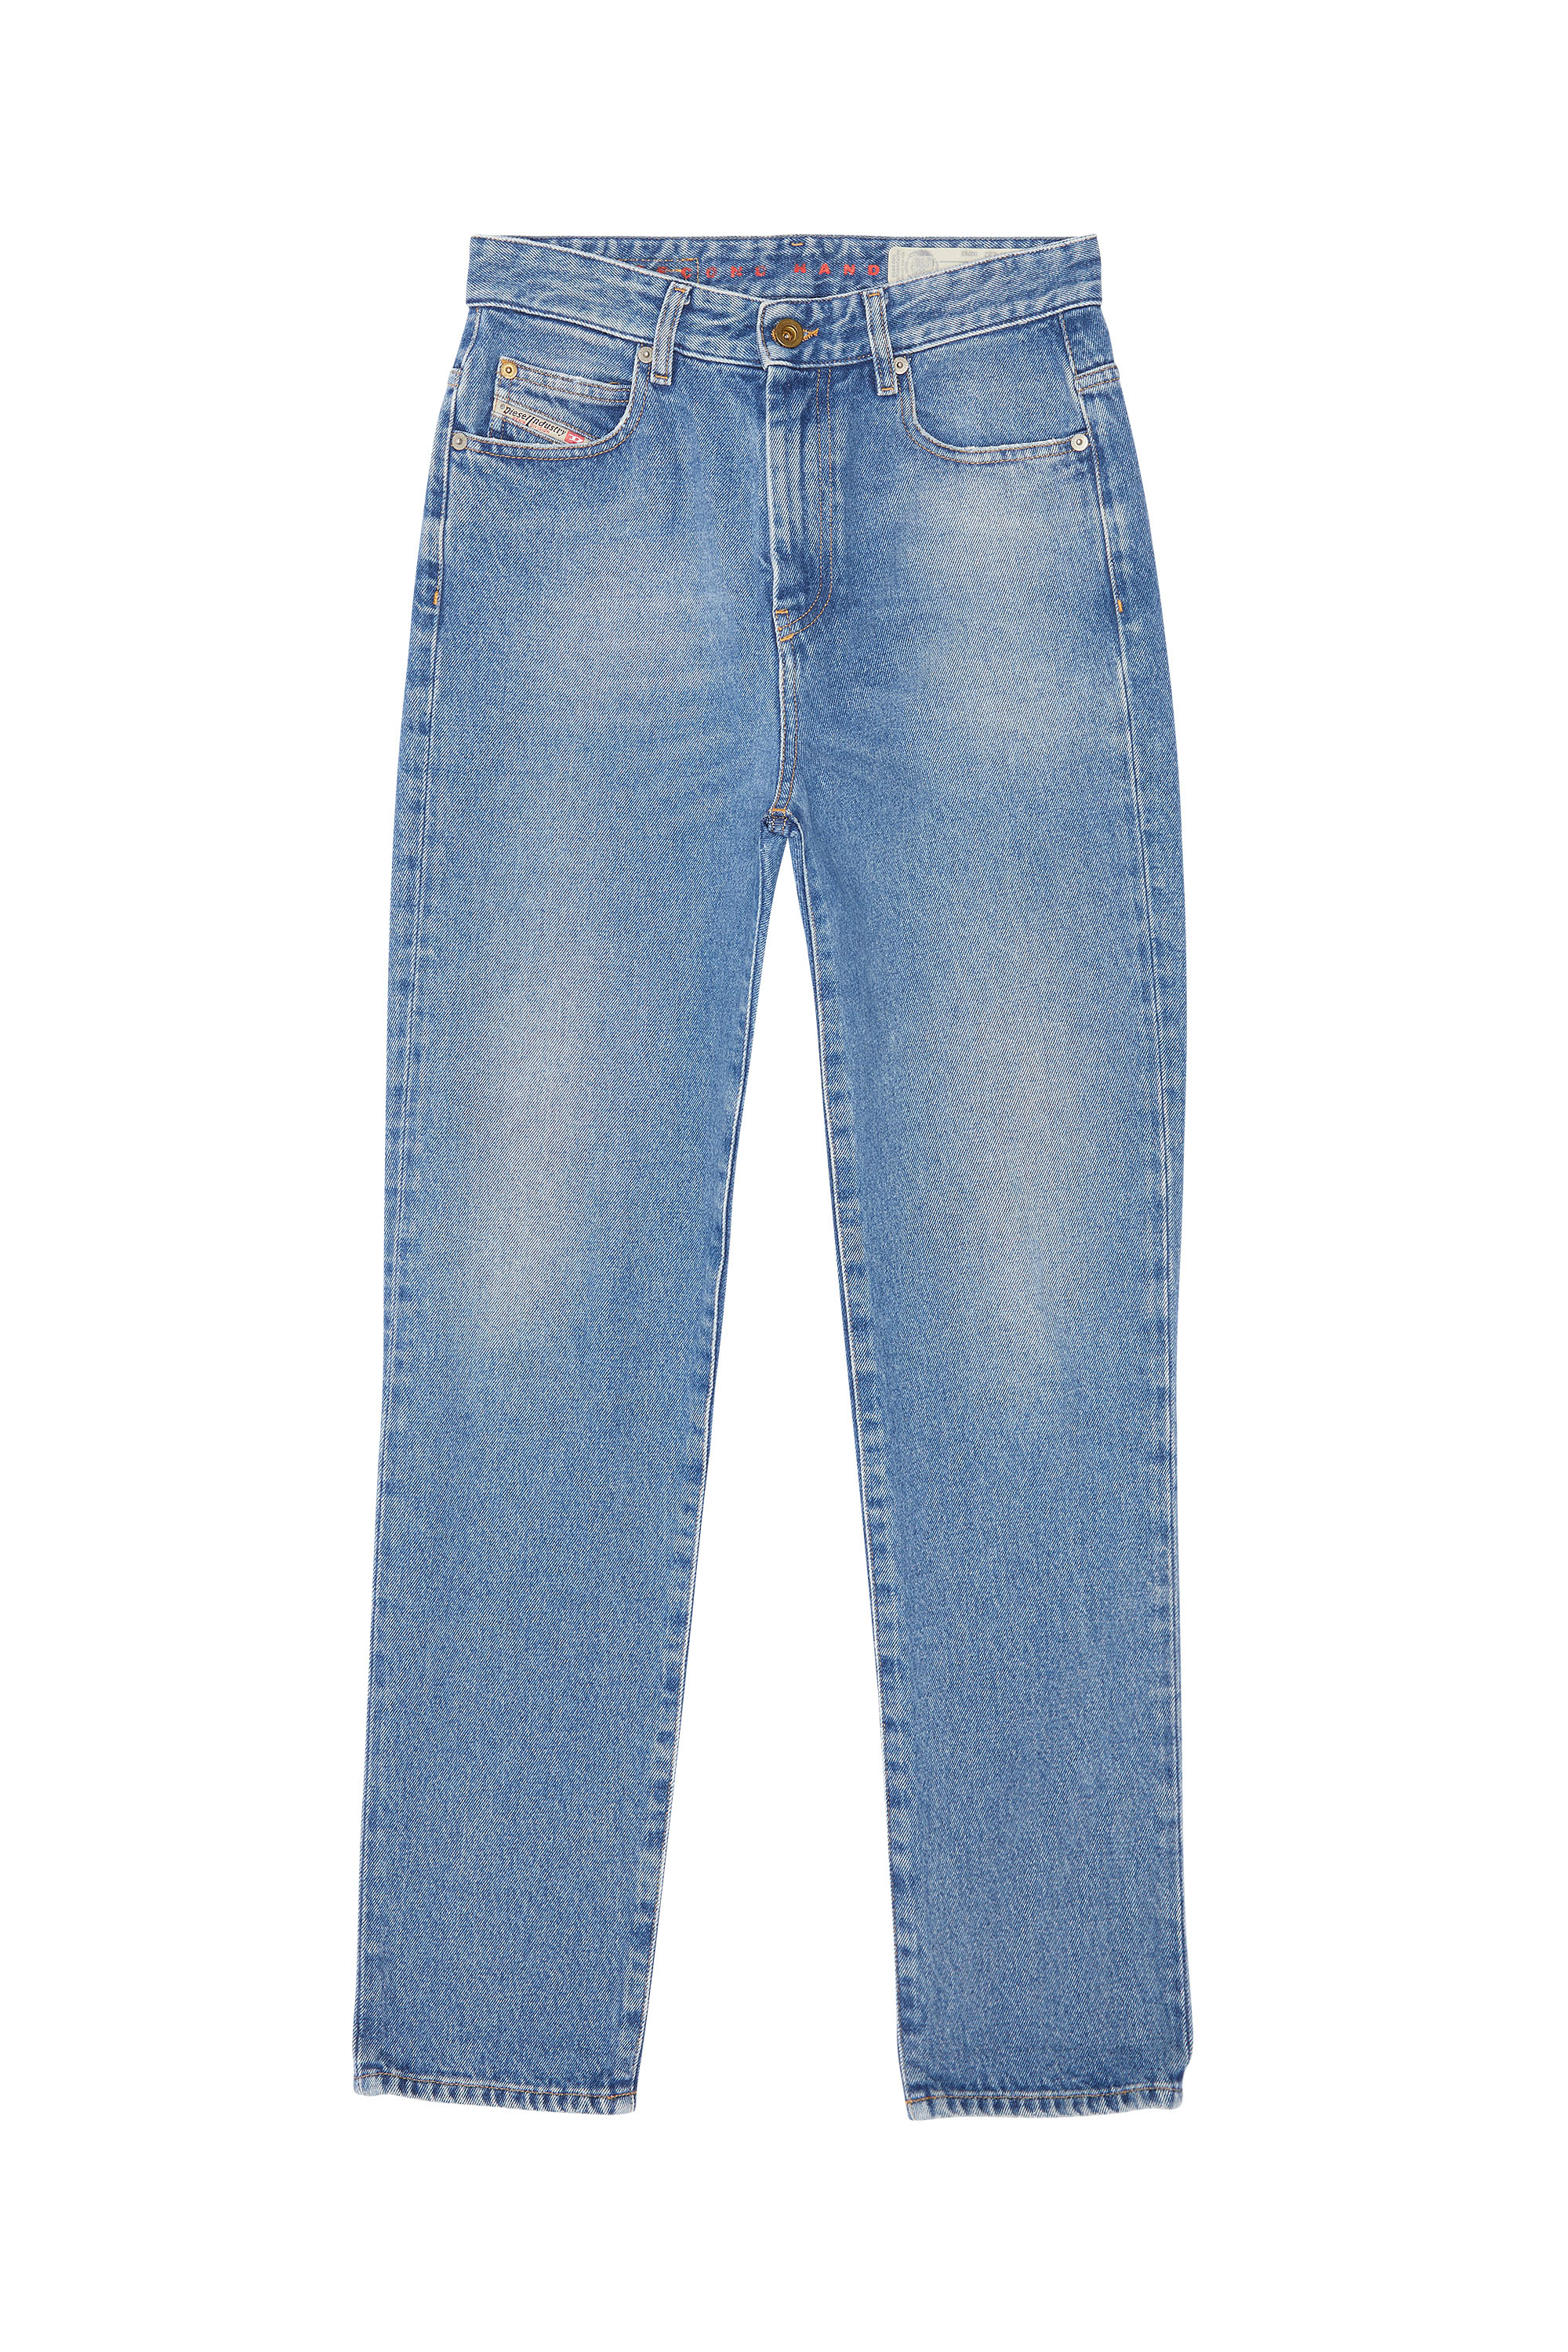 D-EISELLE, Medium blue - Jeans